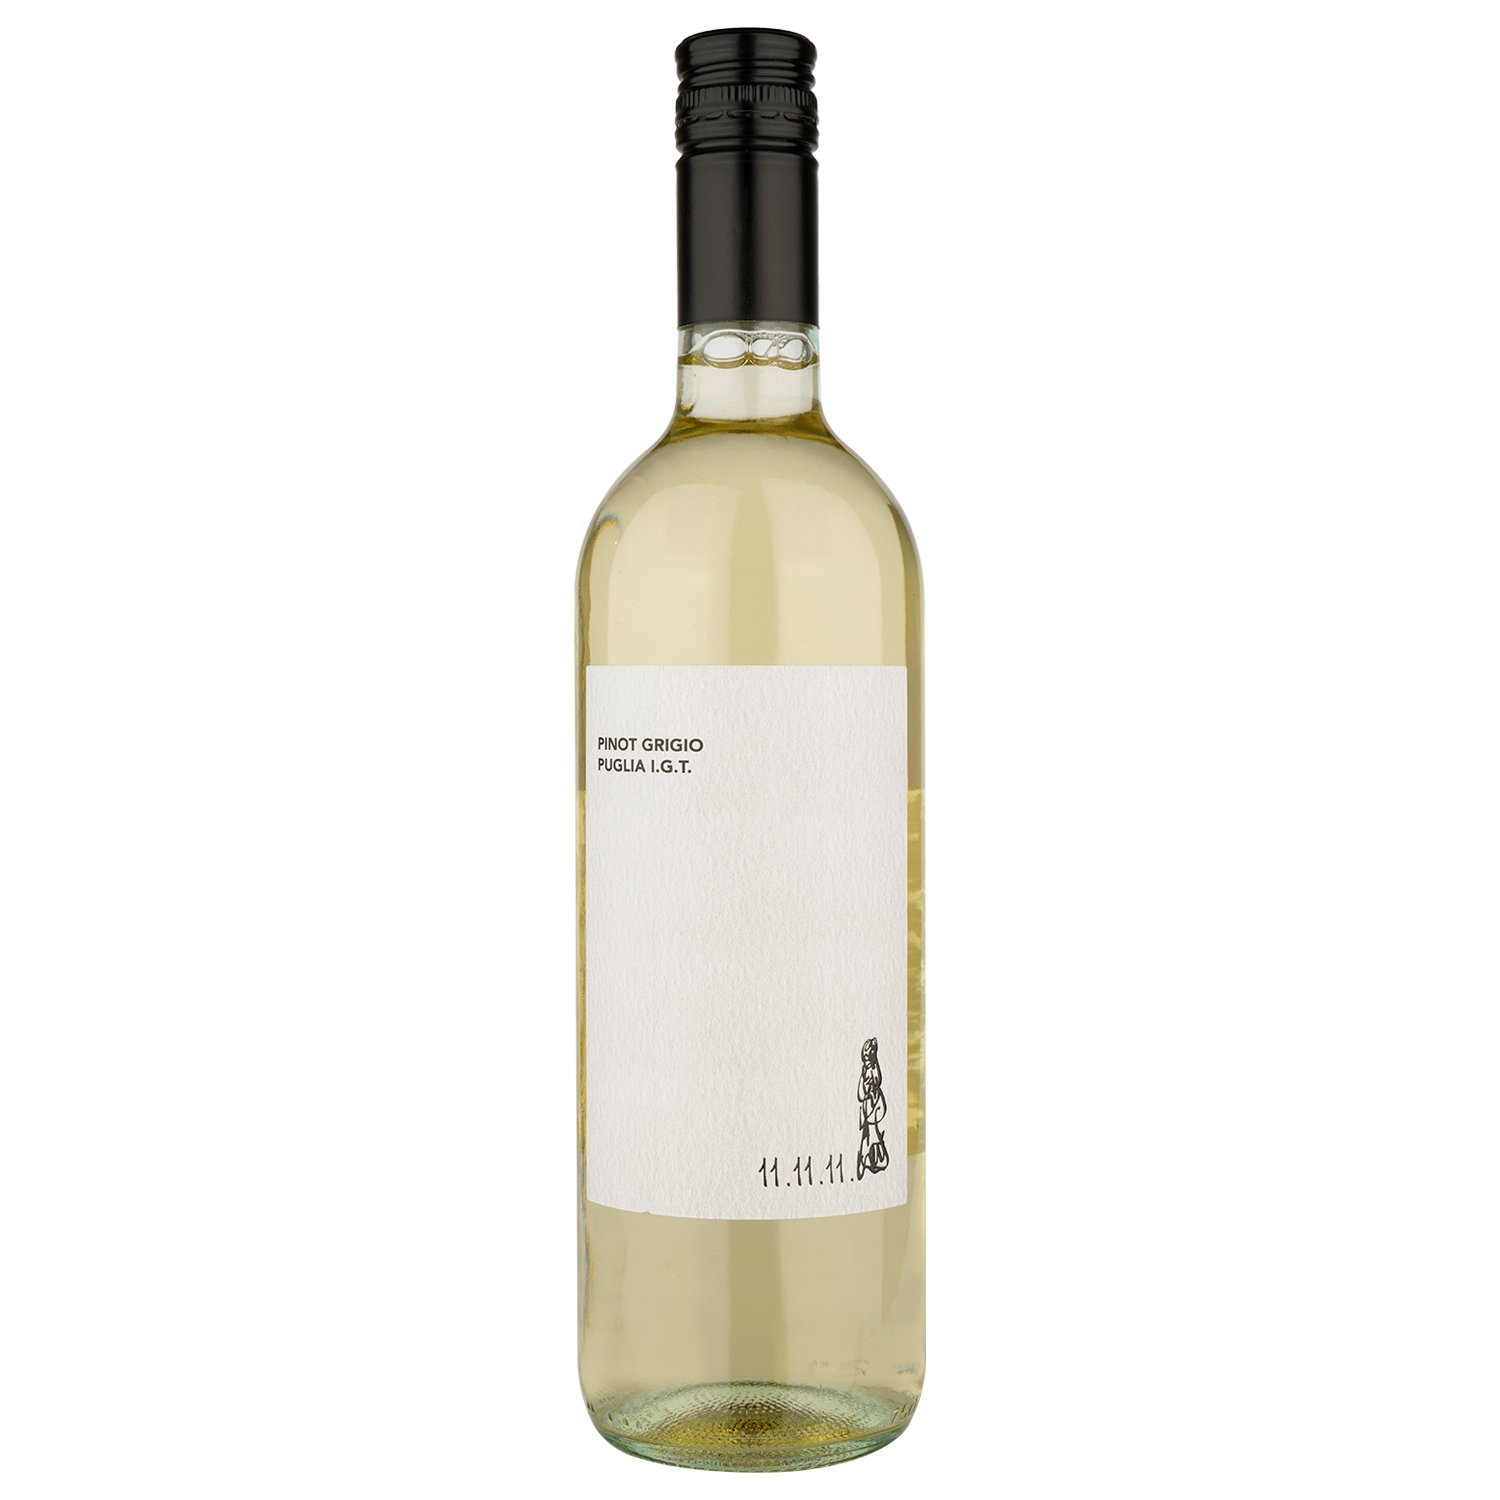 Вино 11.11.11. Puglia Pinot Grigio IGT, белое, сухое, 0,75 л - фото 1